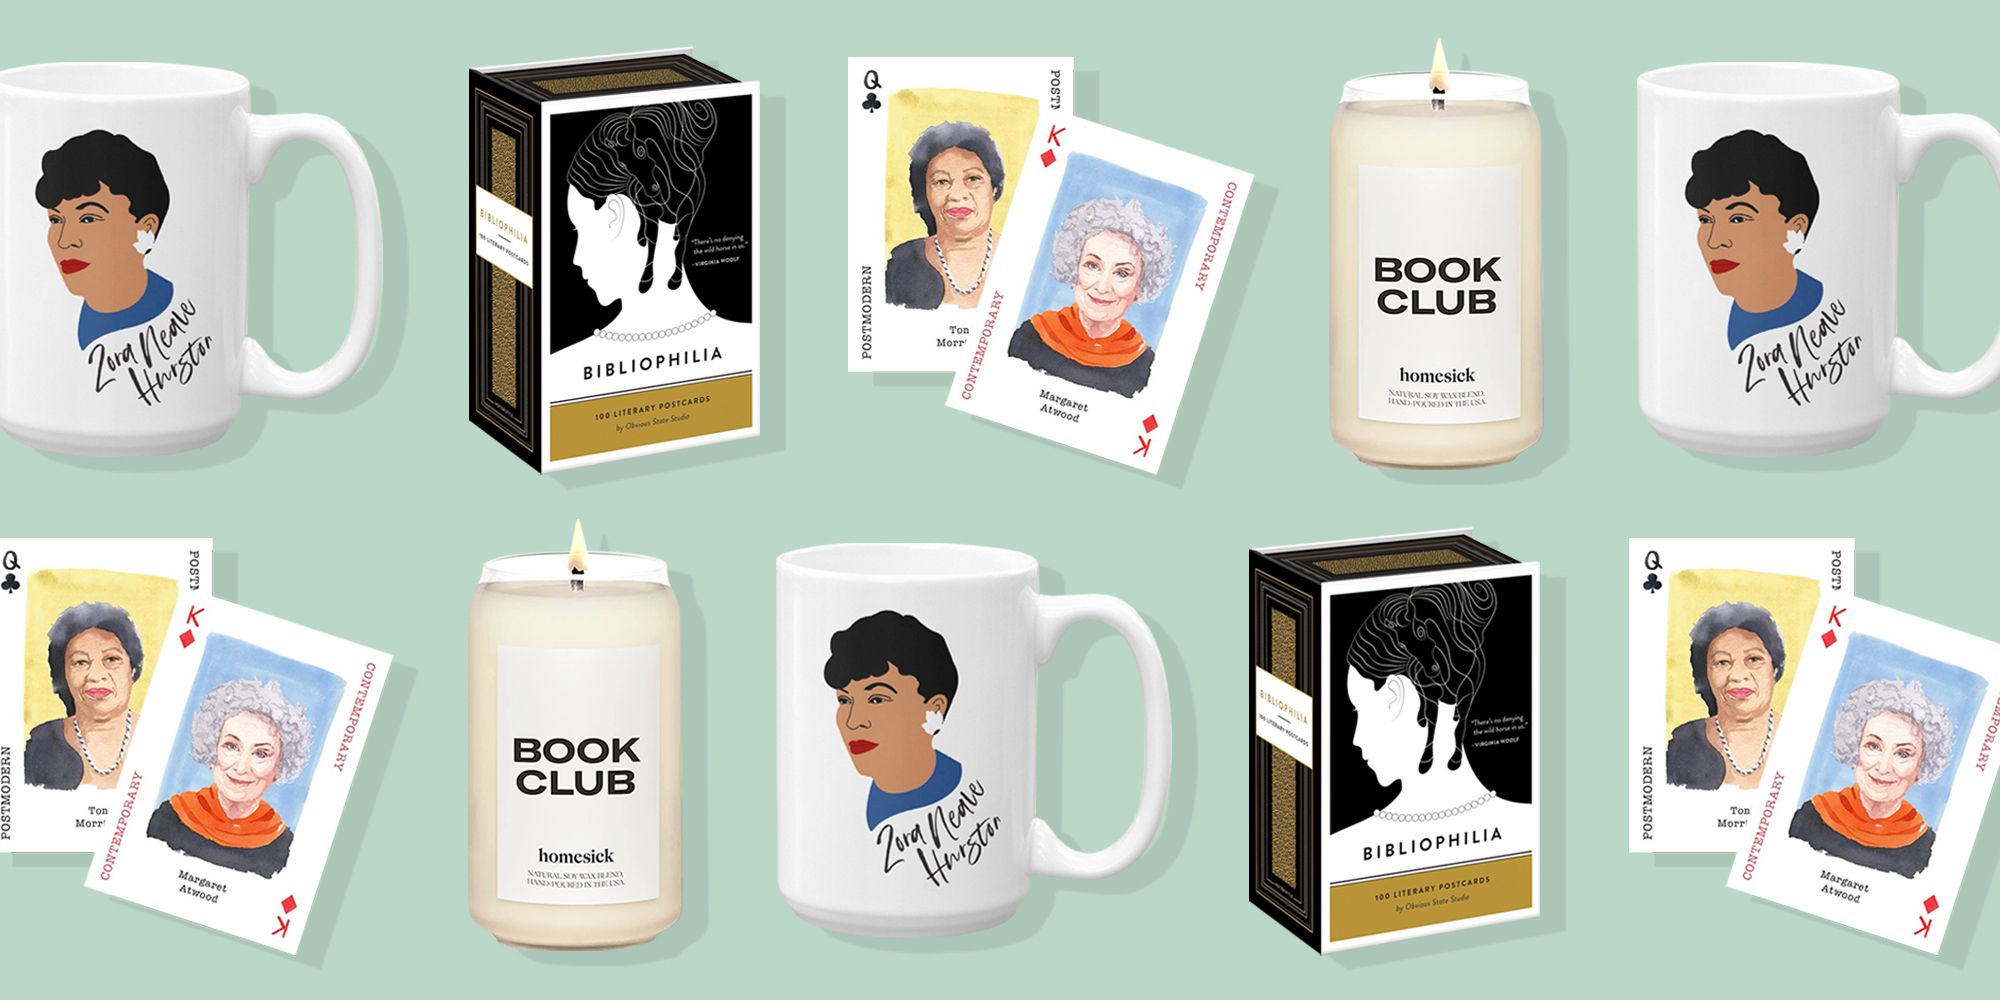 publisher coffee mug present for publisher mug for publisher publisher gift idea gift for publisher publisher mug PUBLISHER GIFT